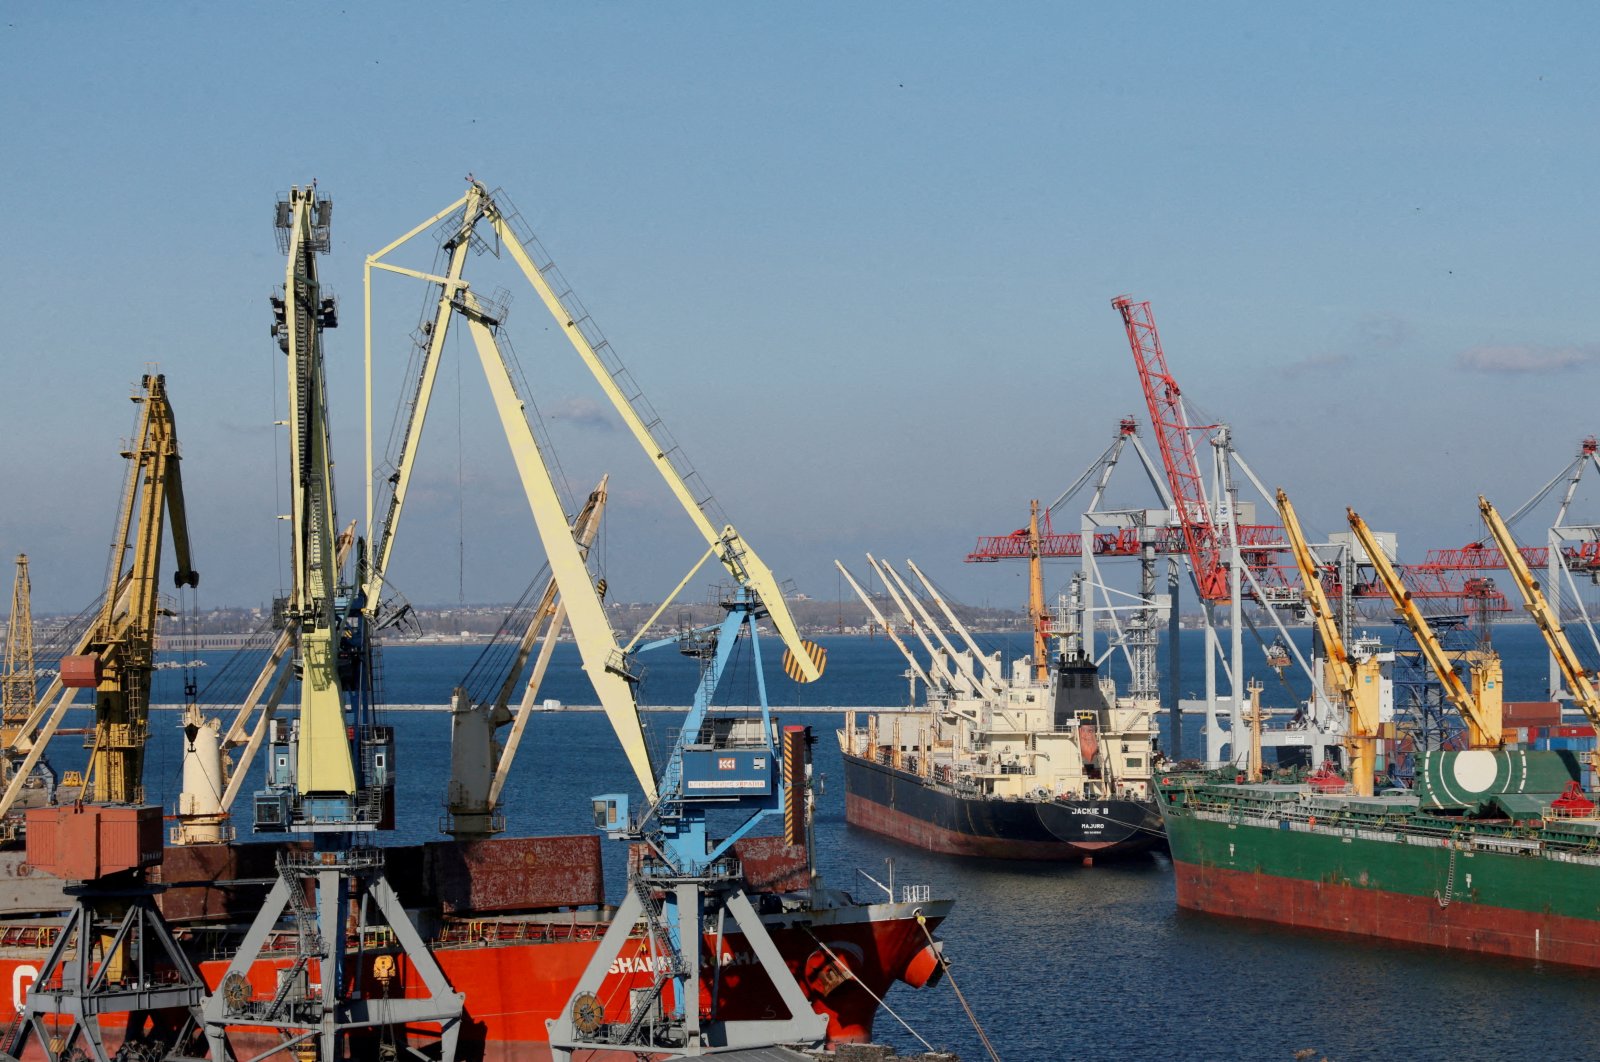 Cargo ships are docked in the Black sea port of Odessa, Ukraine, Nov. 4, 2016. (Reuters Photo)